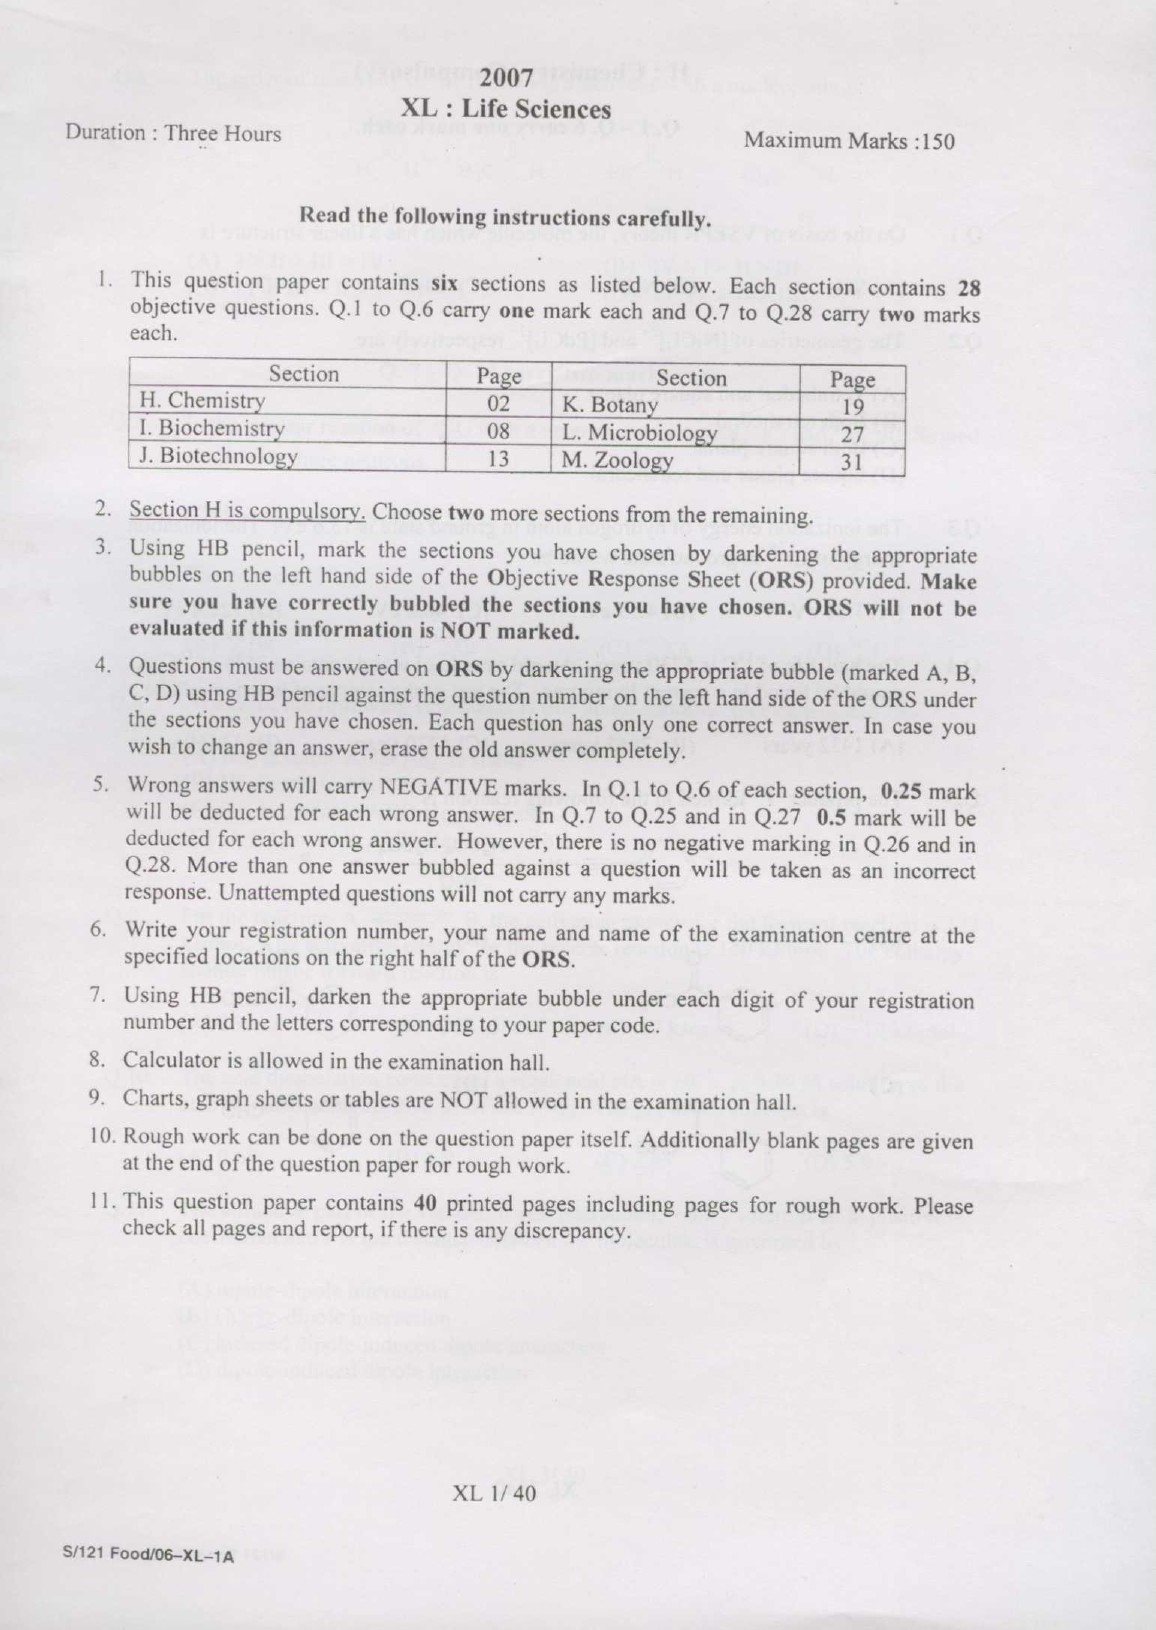 GATE Exam Question Paper 2007 Life Sciences 1